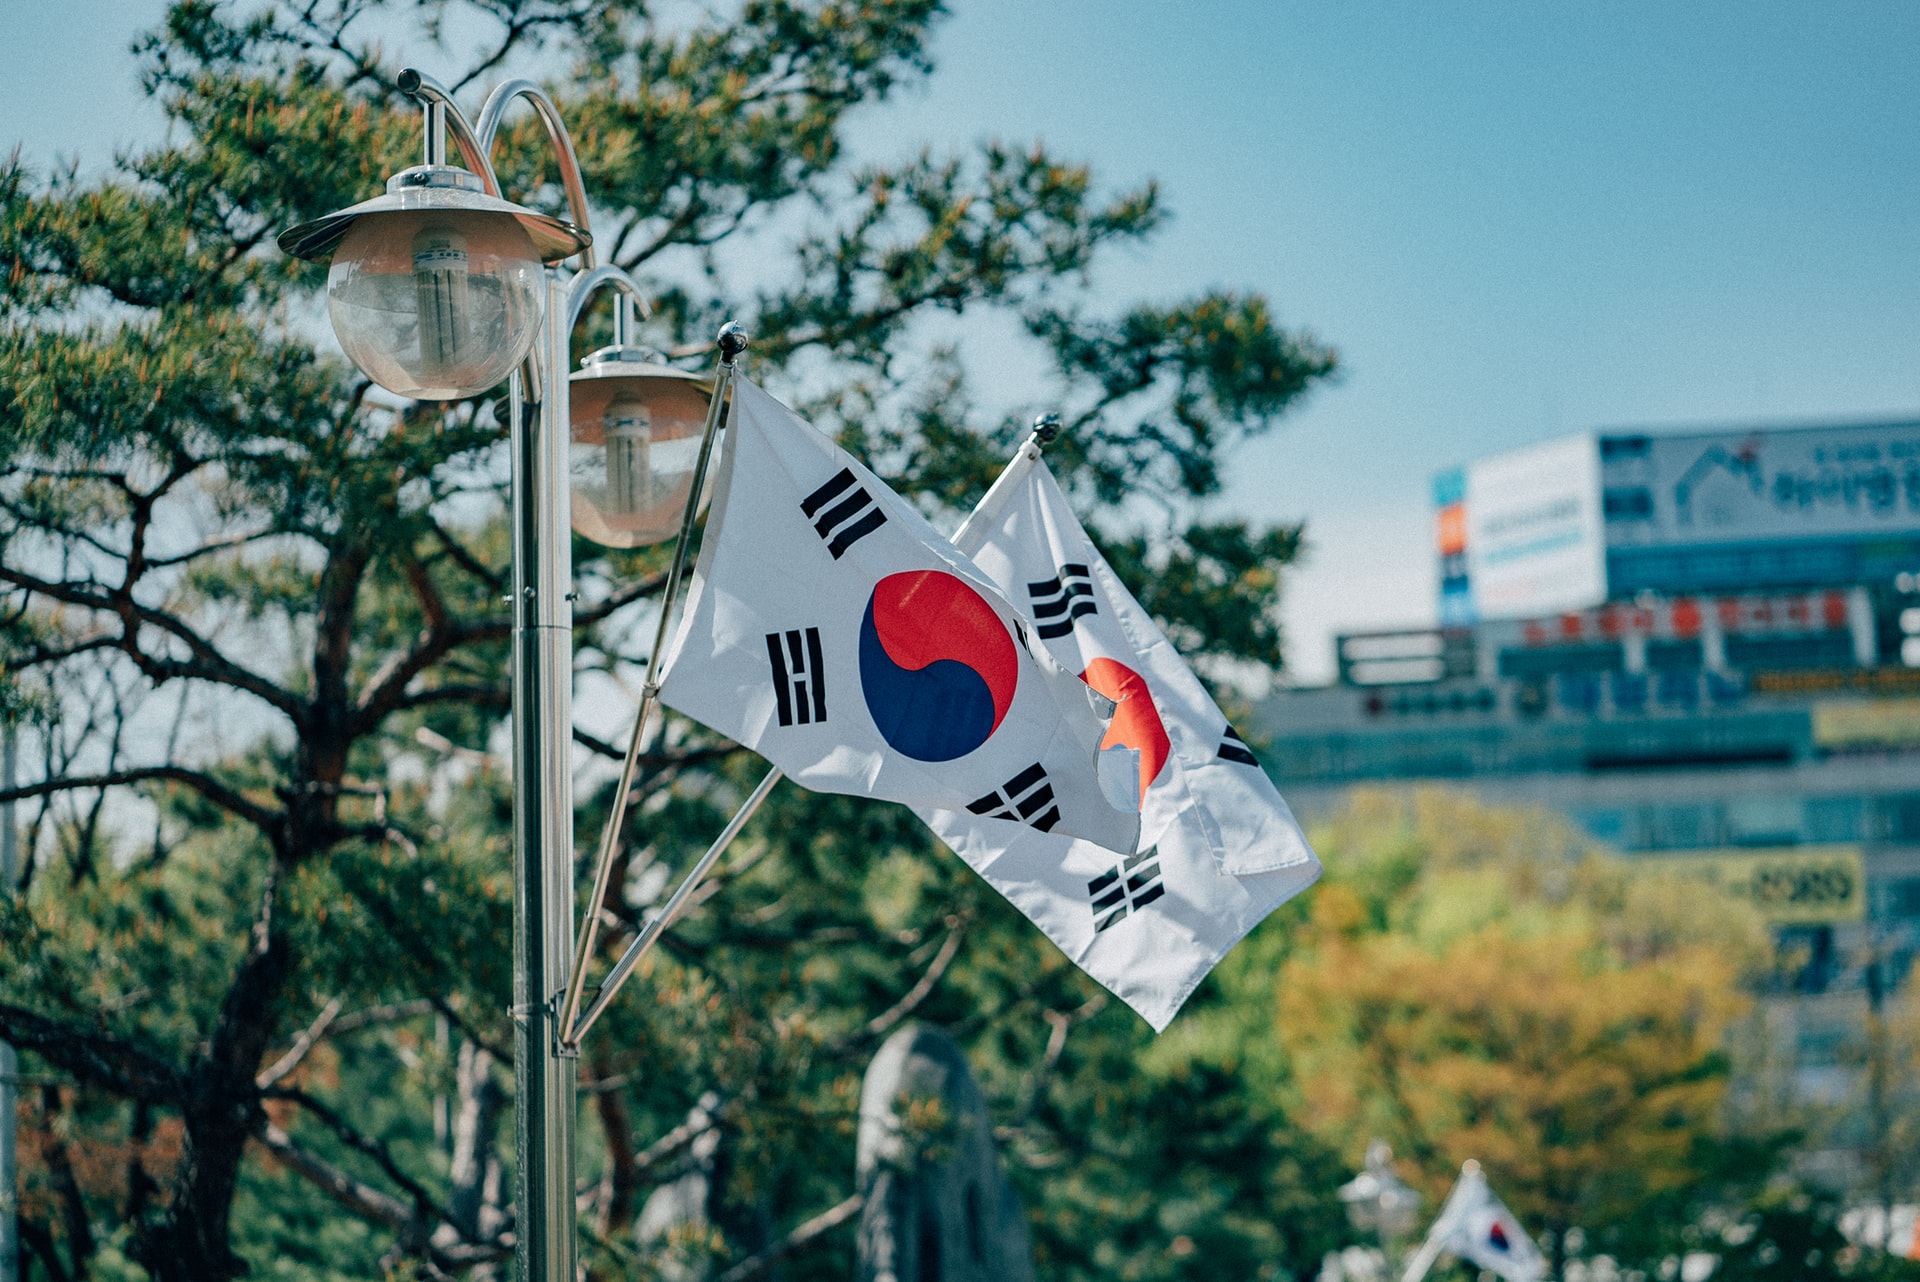 daniel bernard qjsmpf0aO48 unsplash - کره جنوبی مالیات رمزارزها را به تعویق انداخت و ممنوعیت عرضه اولیه کوین را لغو می کند